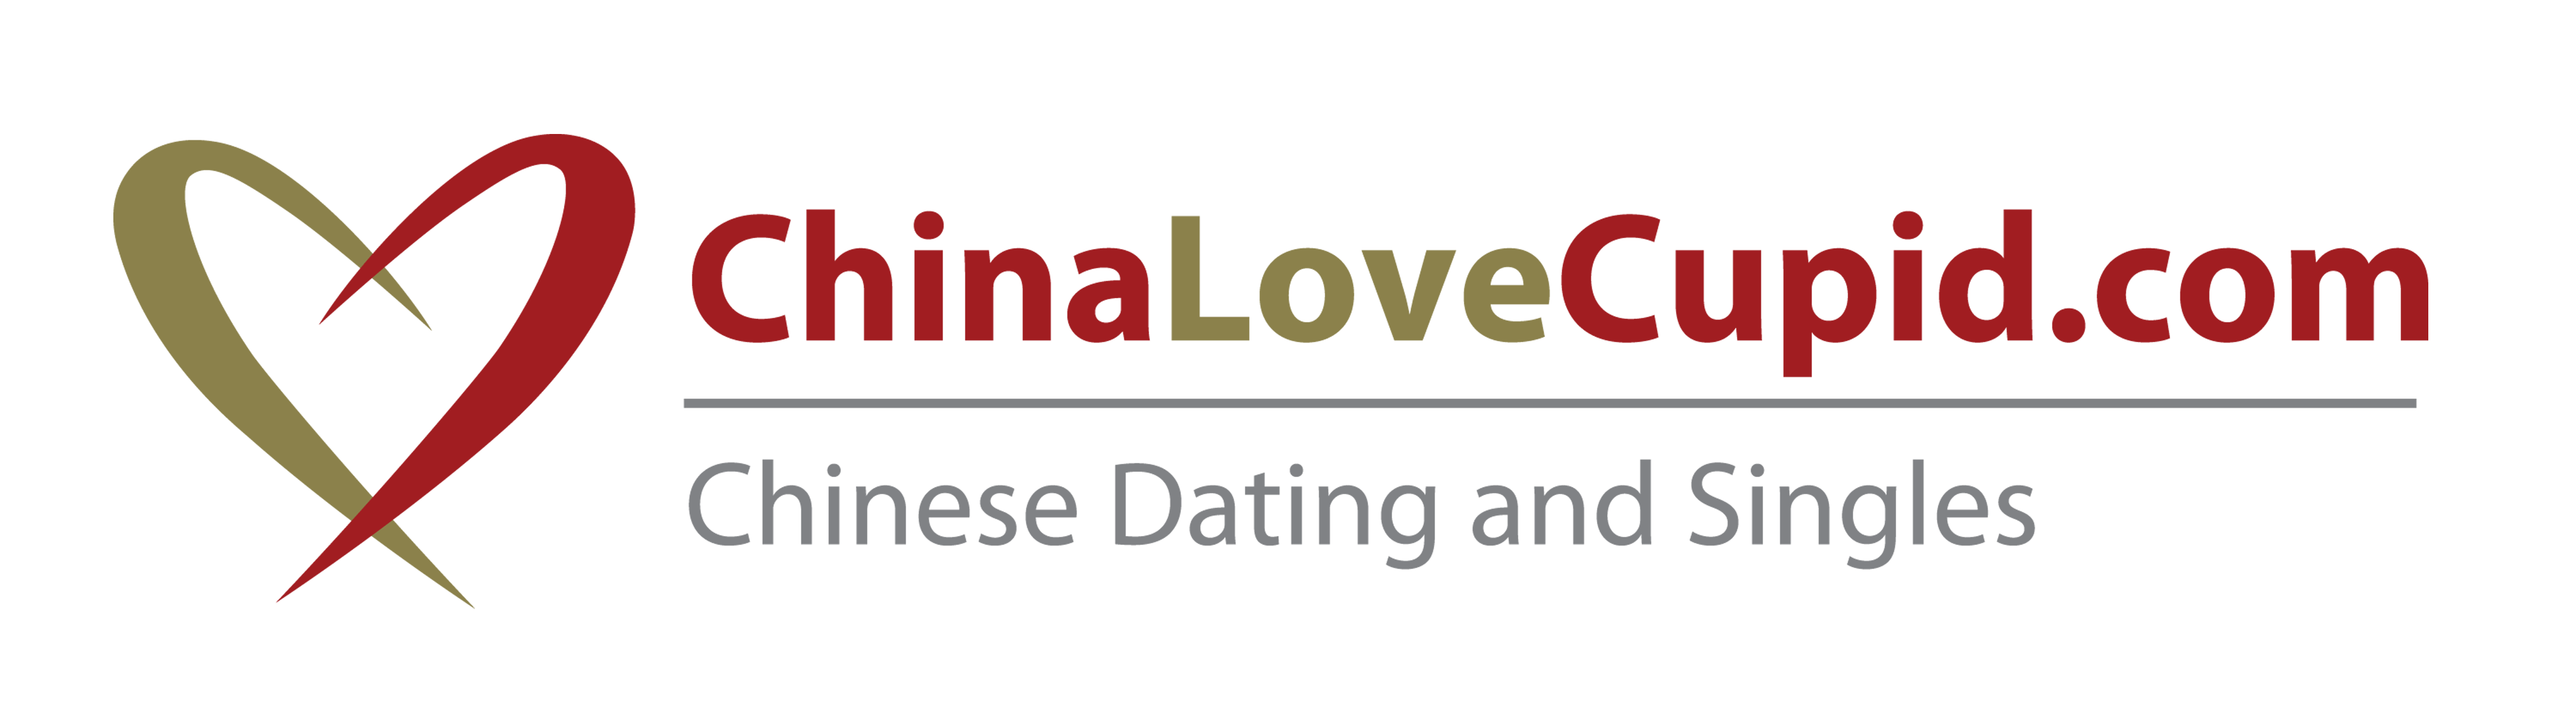 Chinalovecupid login